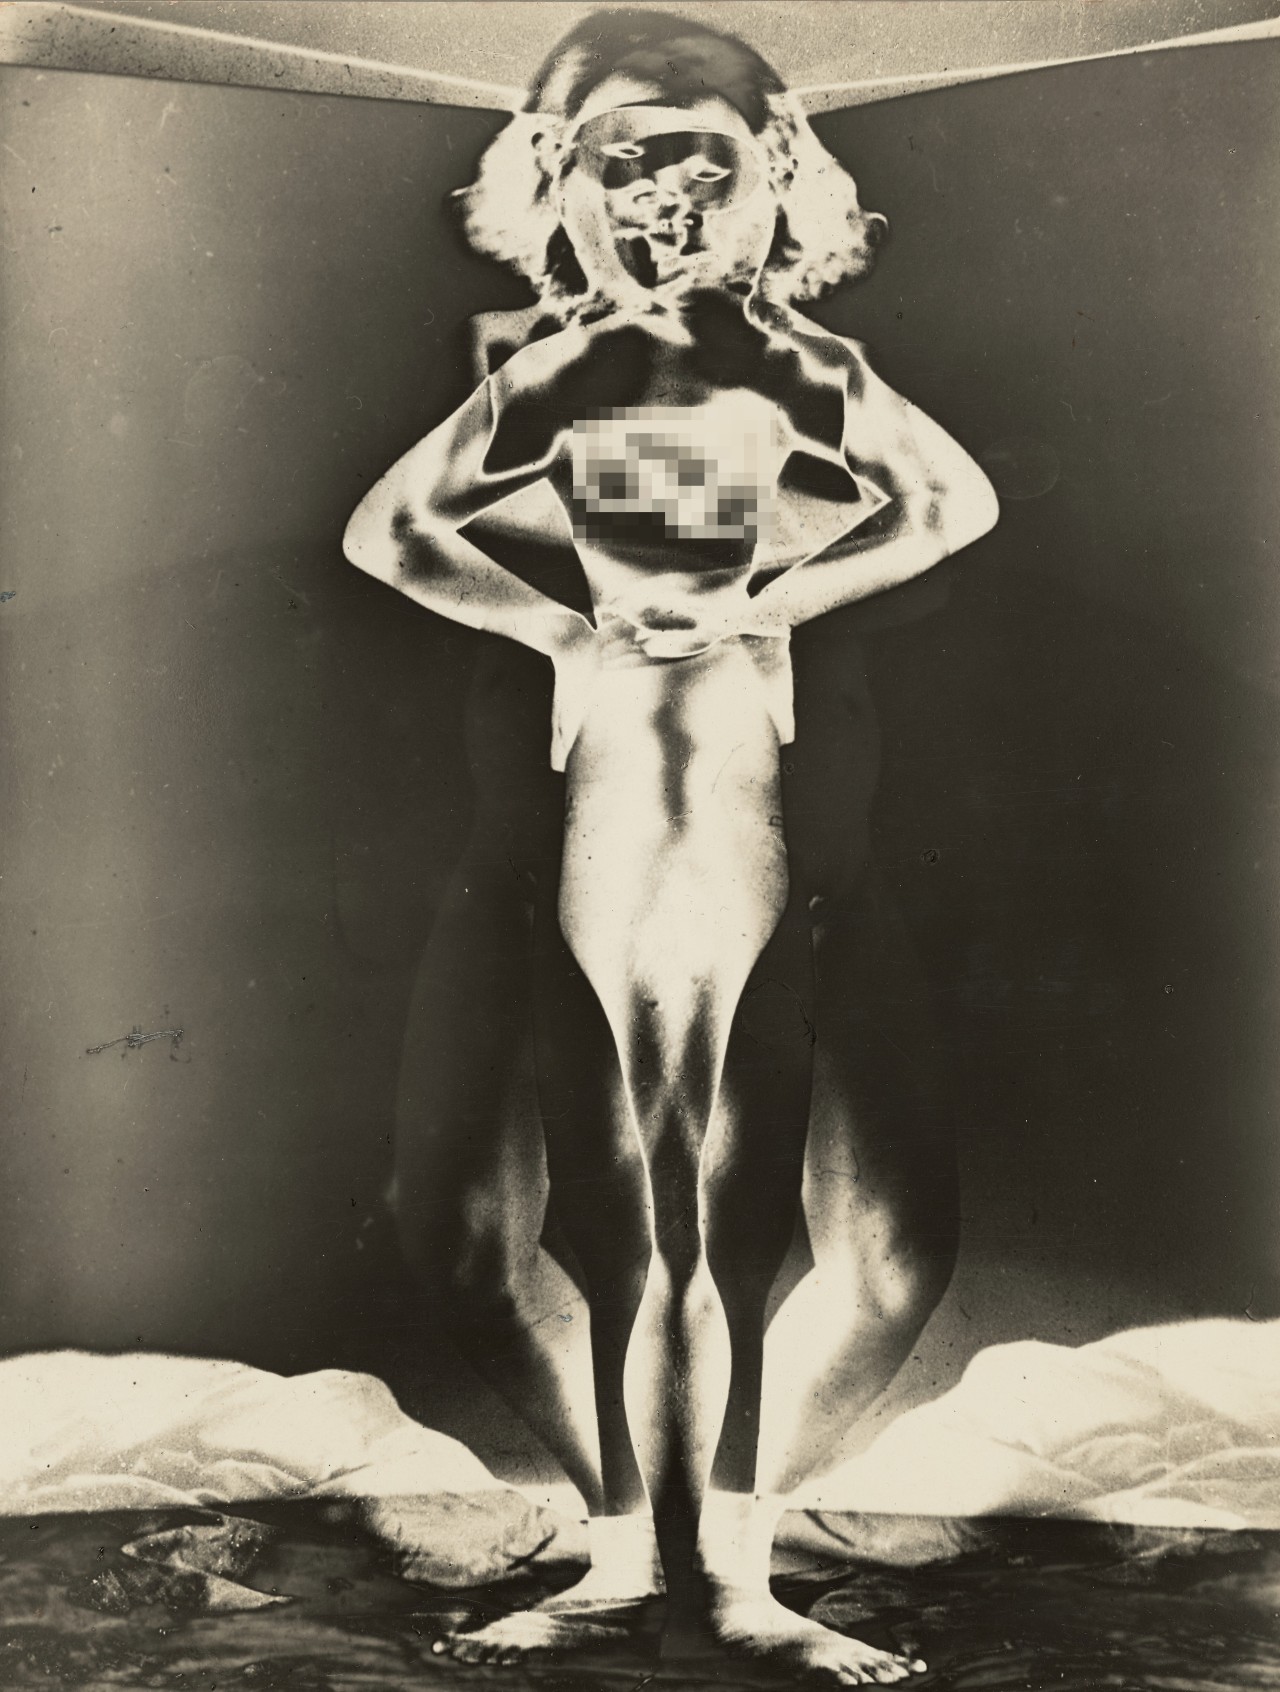 OSAMU SHIIHARA 椎原 治 / “SPIN” / 1939
[gelatin silver print (solarized) | 29.5 × 22.5 cm.] #osamu shiihara#surreal#analog#film photography#modern art#monochrome #black and white #30s#japanese#photography#u